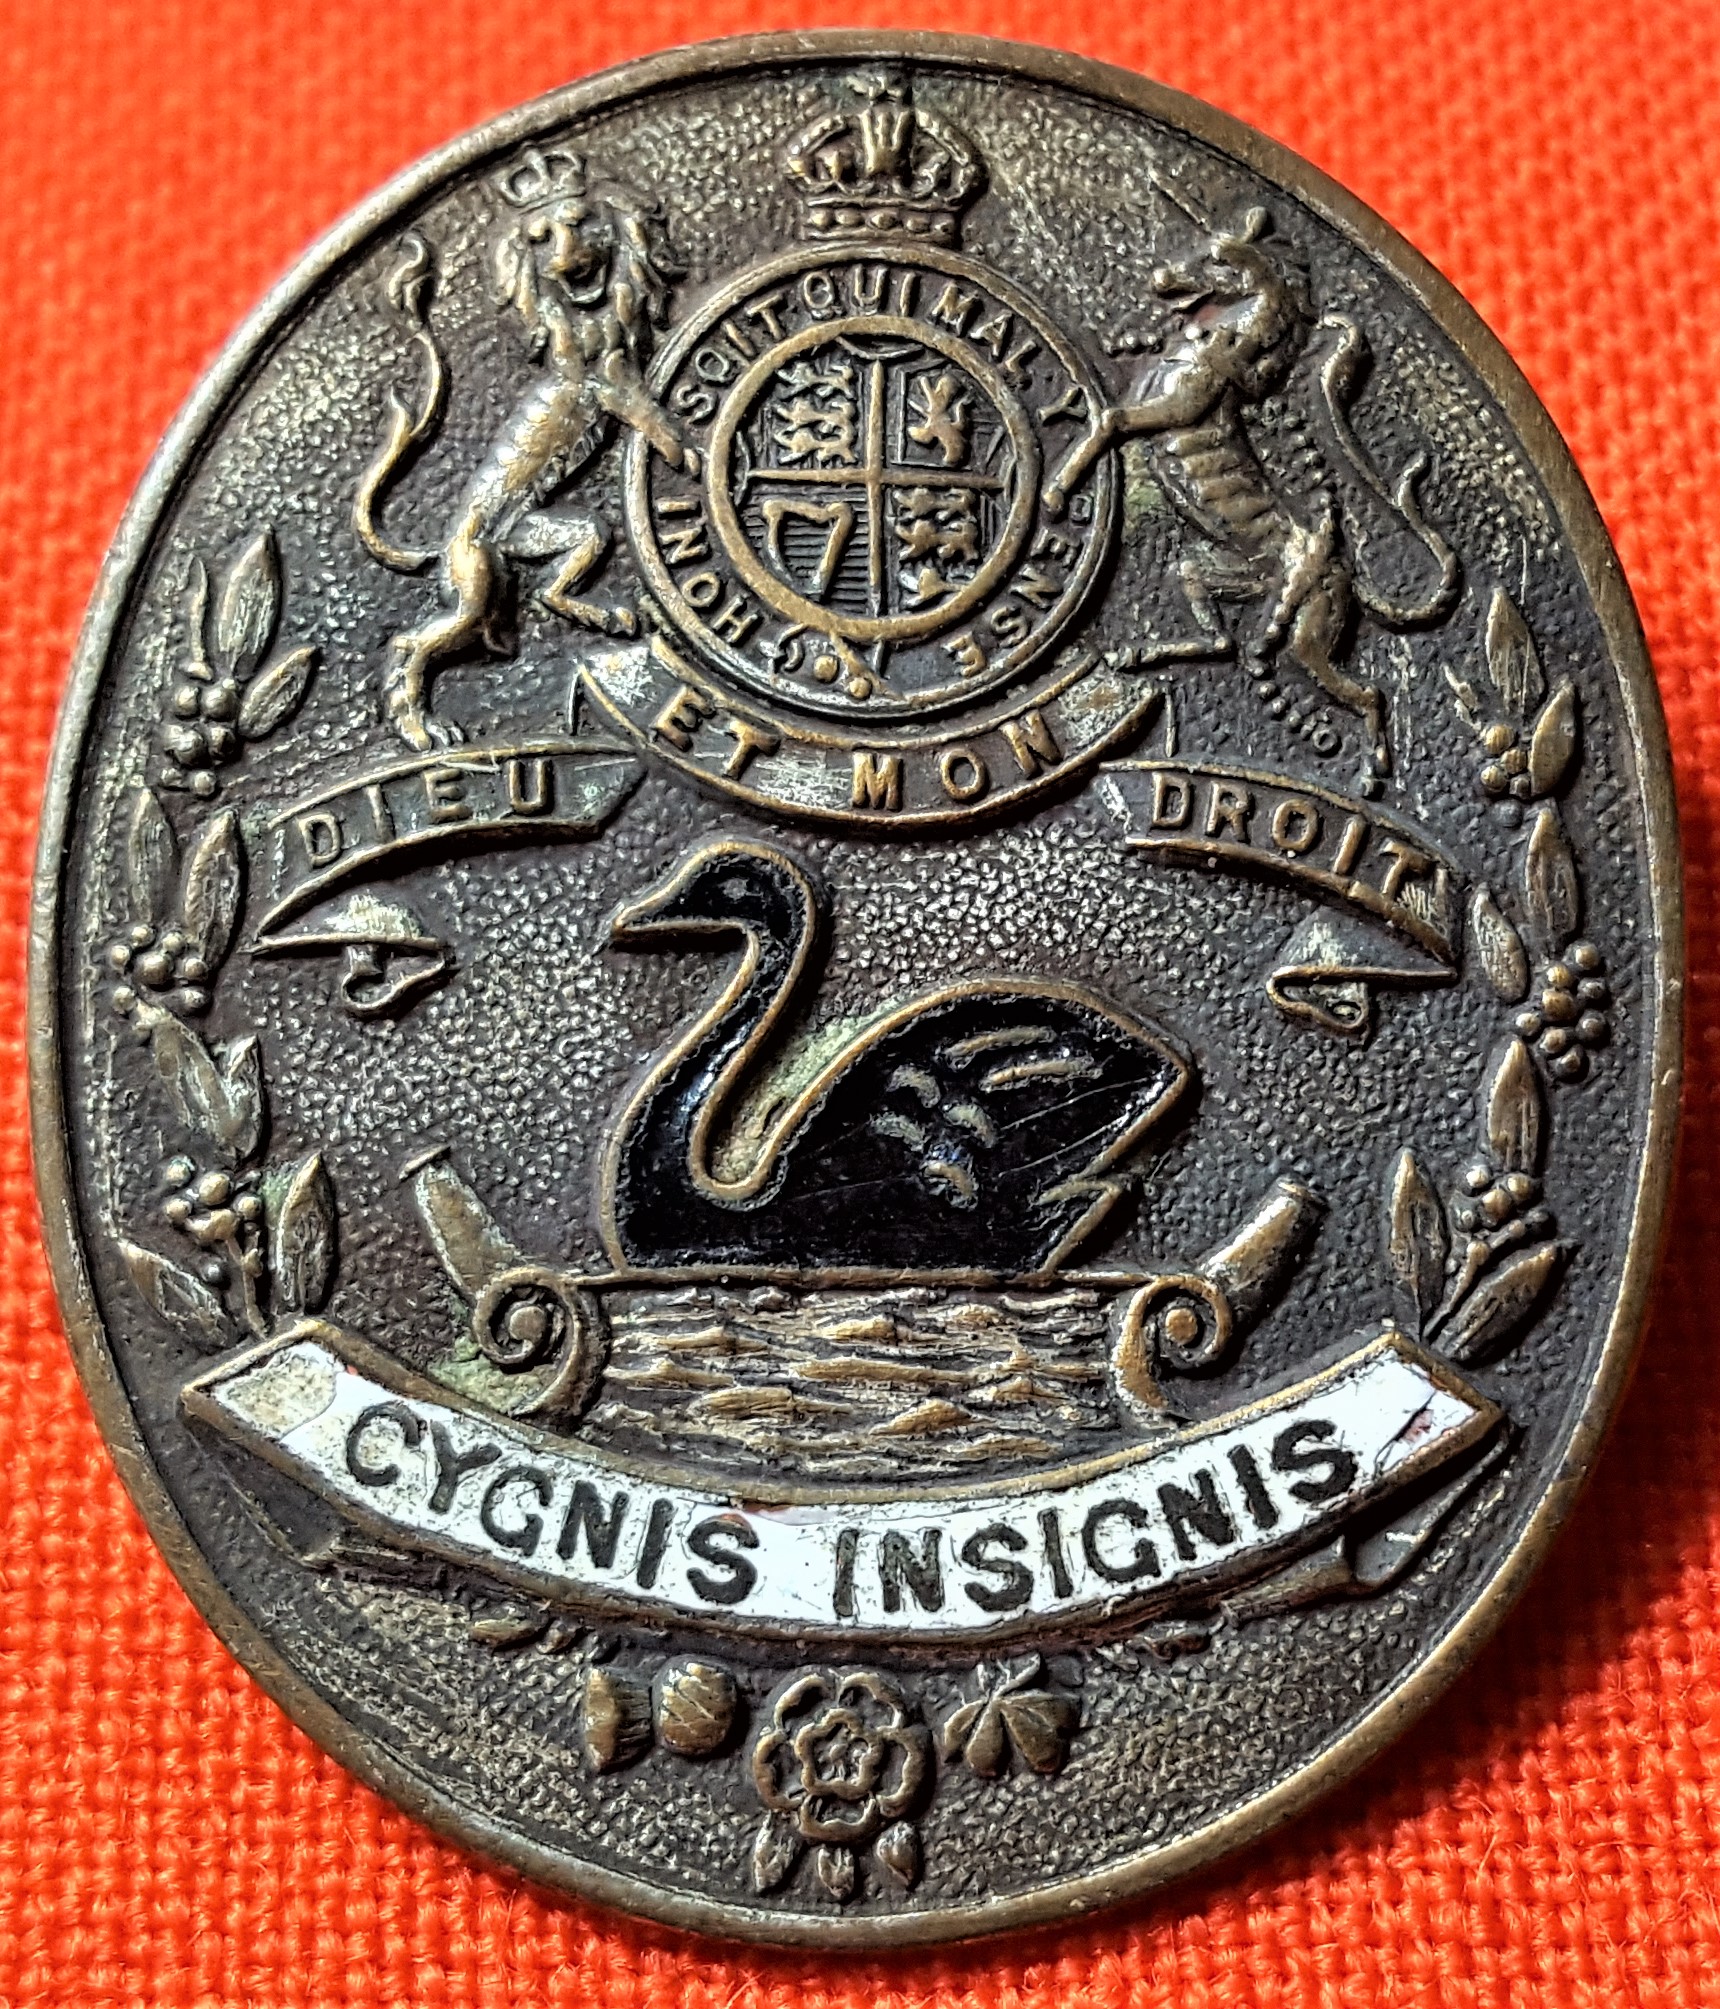 C. 1922 West Australian Police Cap badge